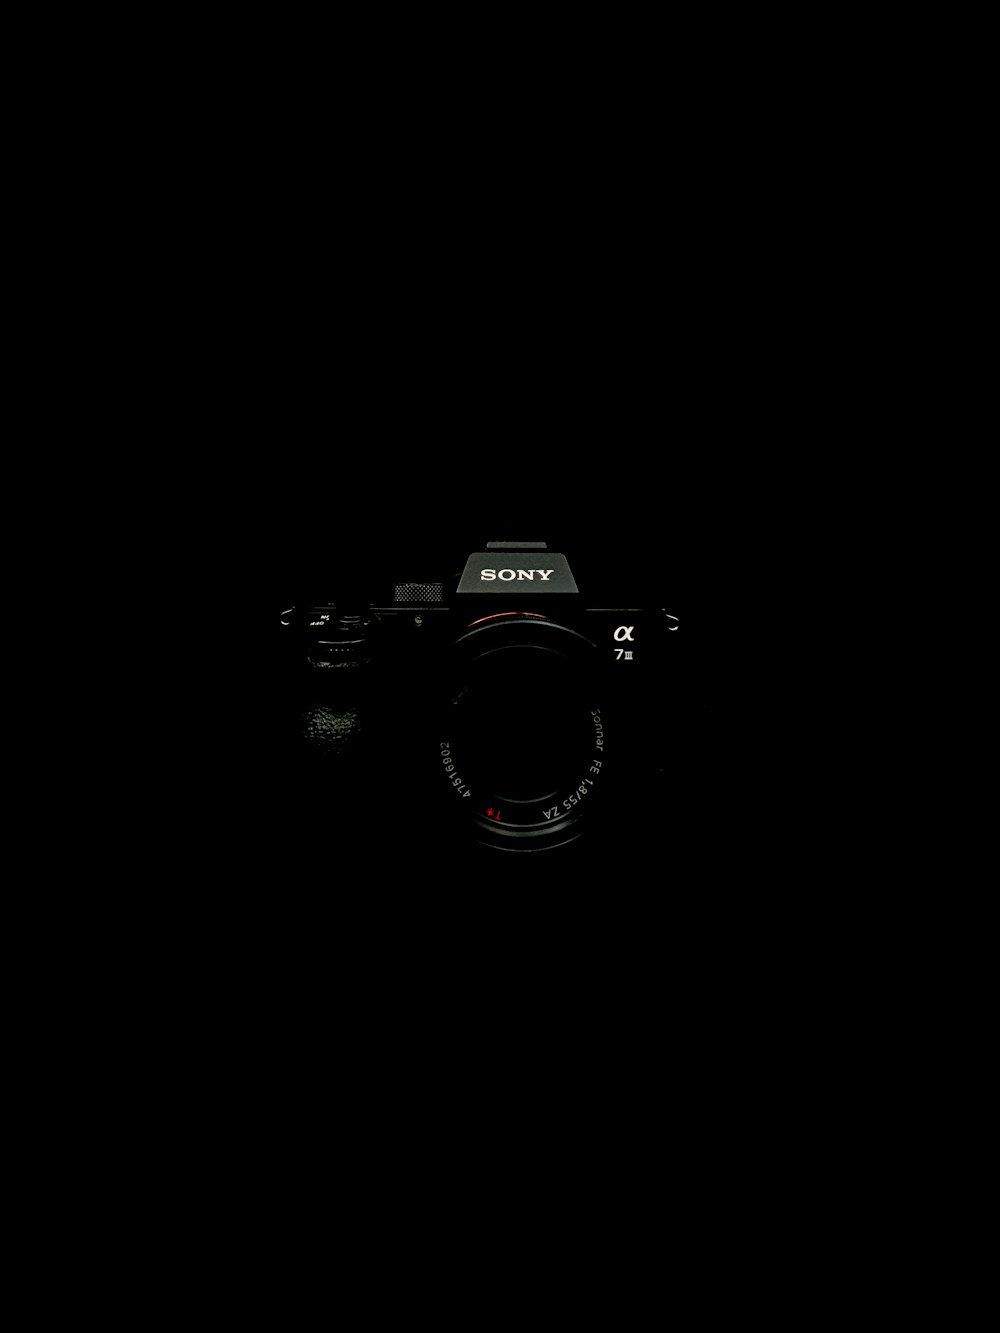 Cámara DSLR Nikon negra sobre superficie negra